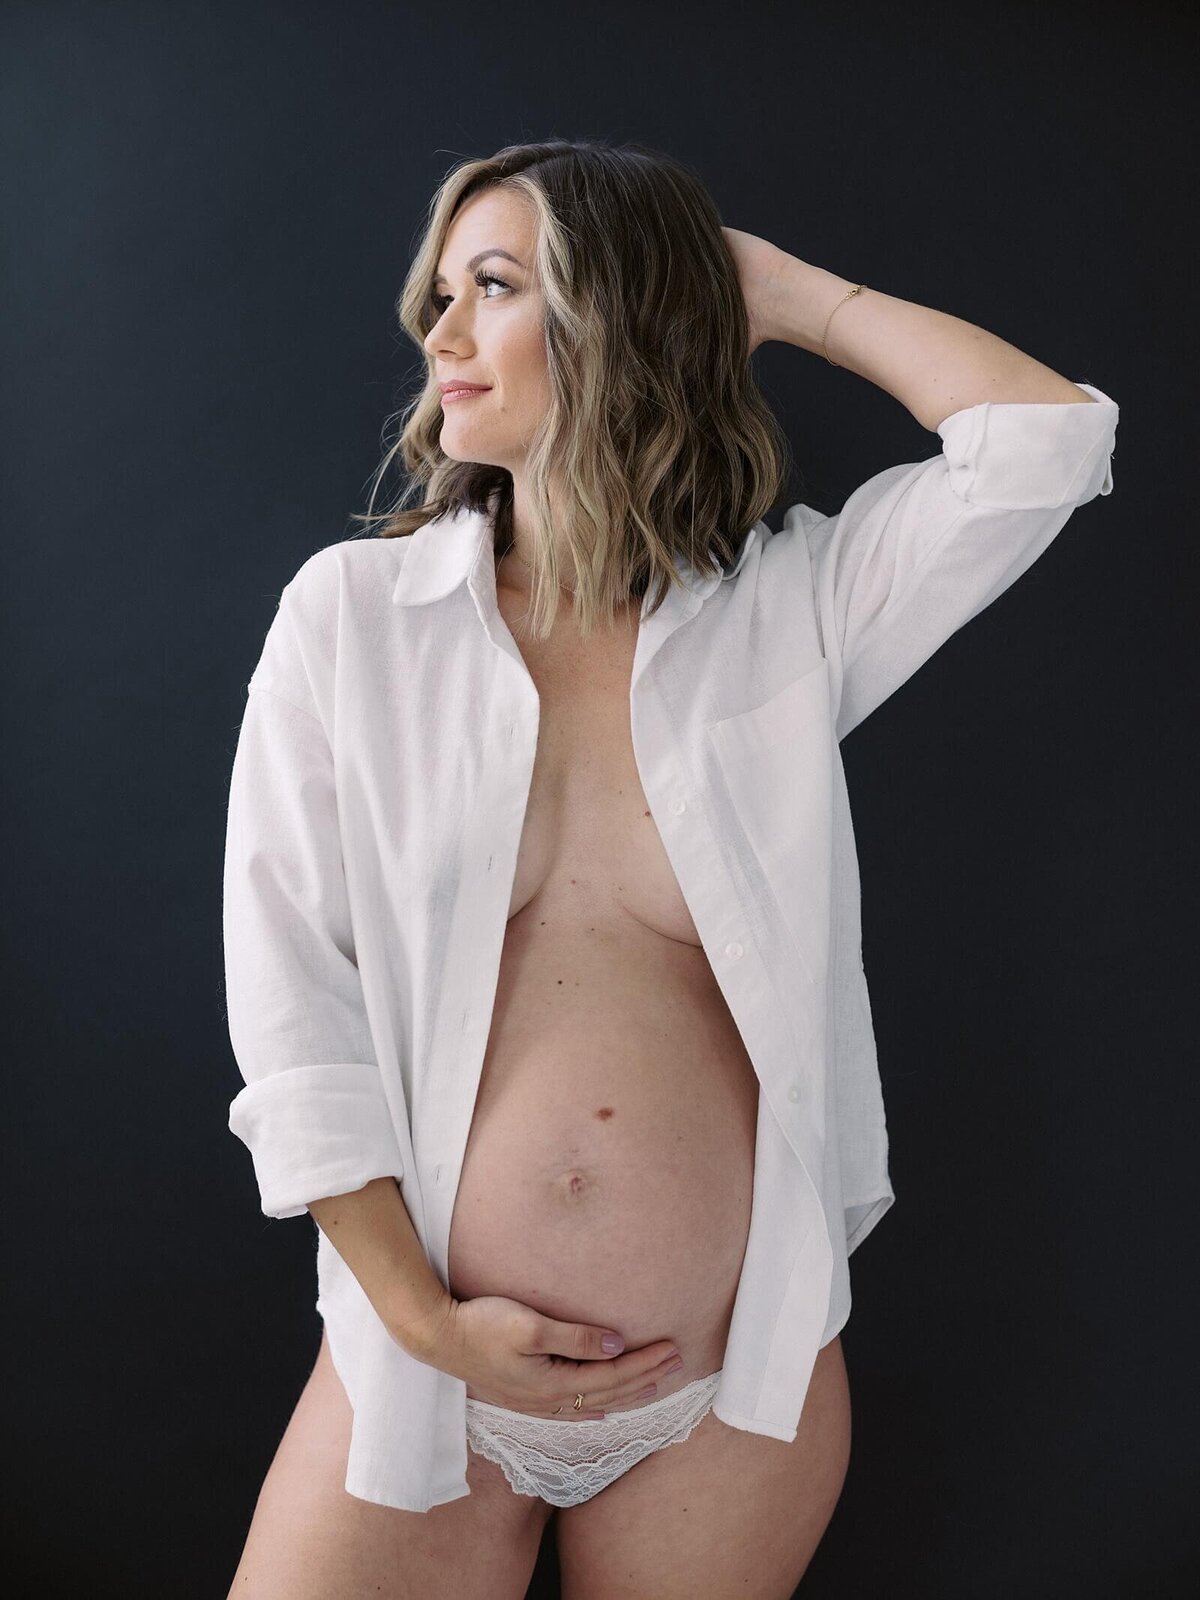 seattle-maternity-photographer-jacqueline-benet_0025